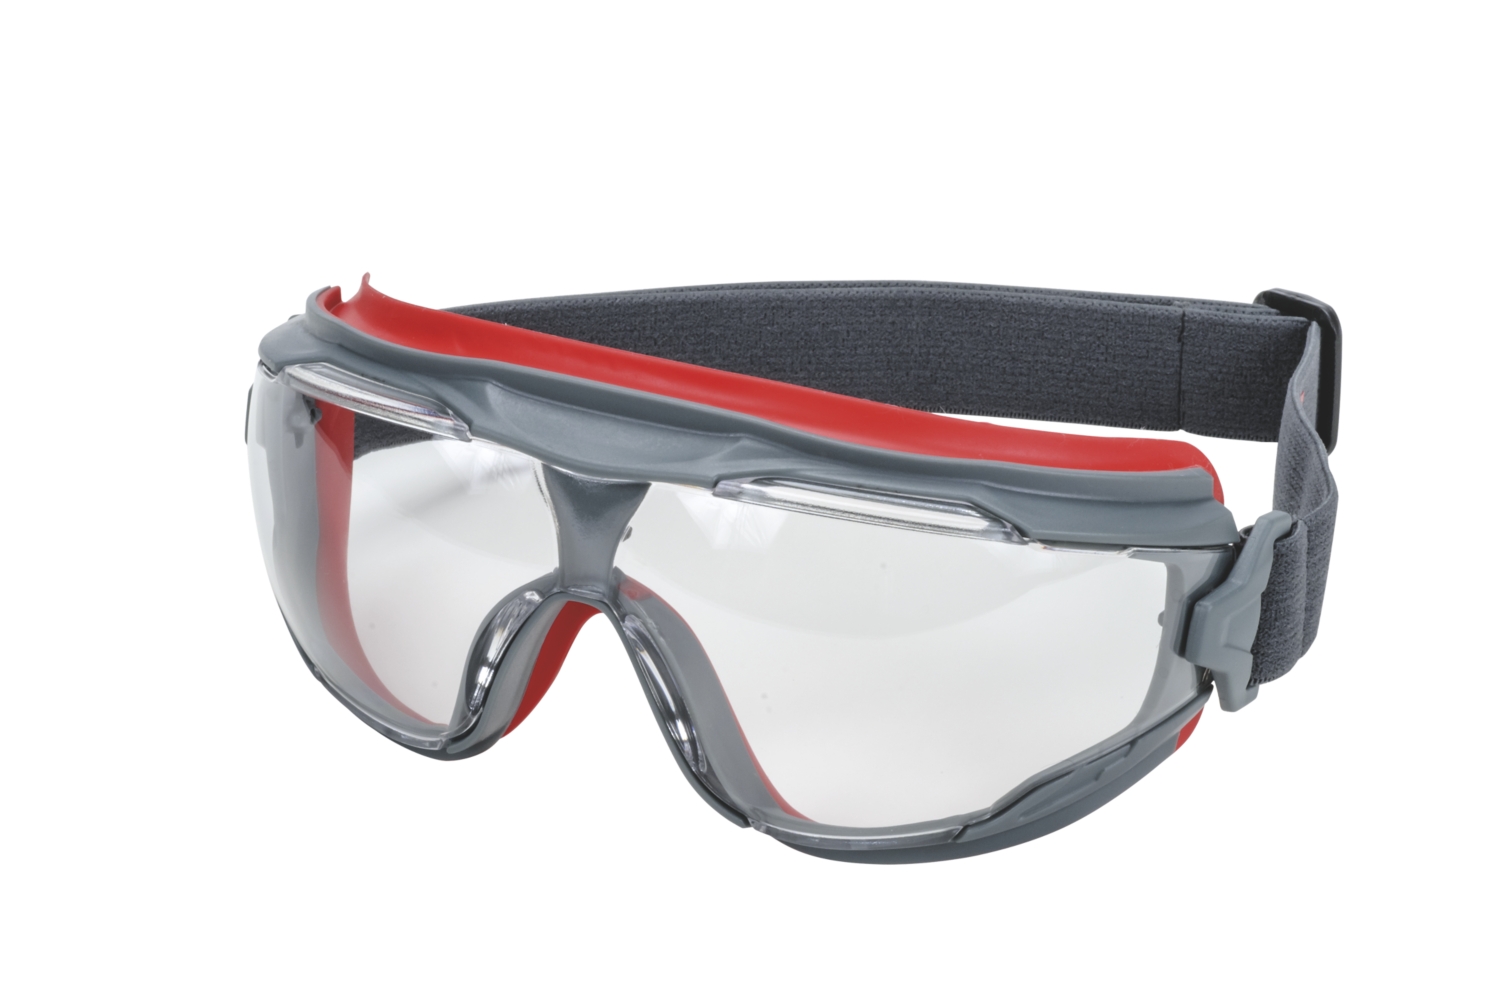 Lunette-masque de protection Goggle Gear 501 3M Protection